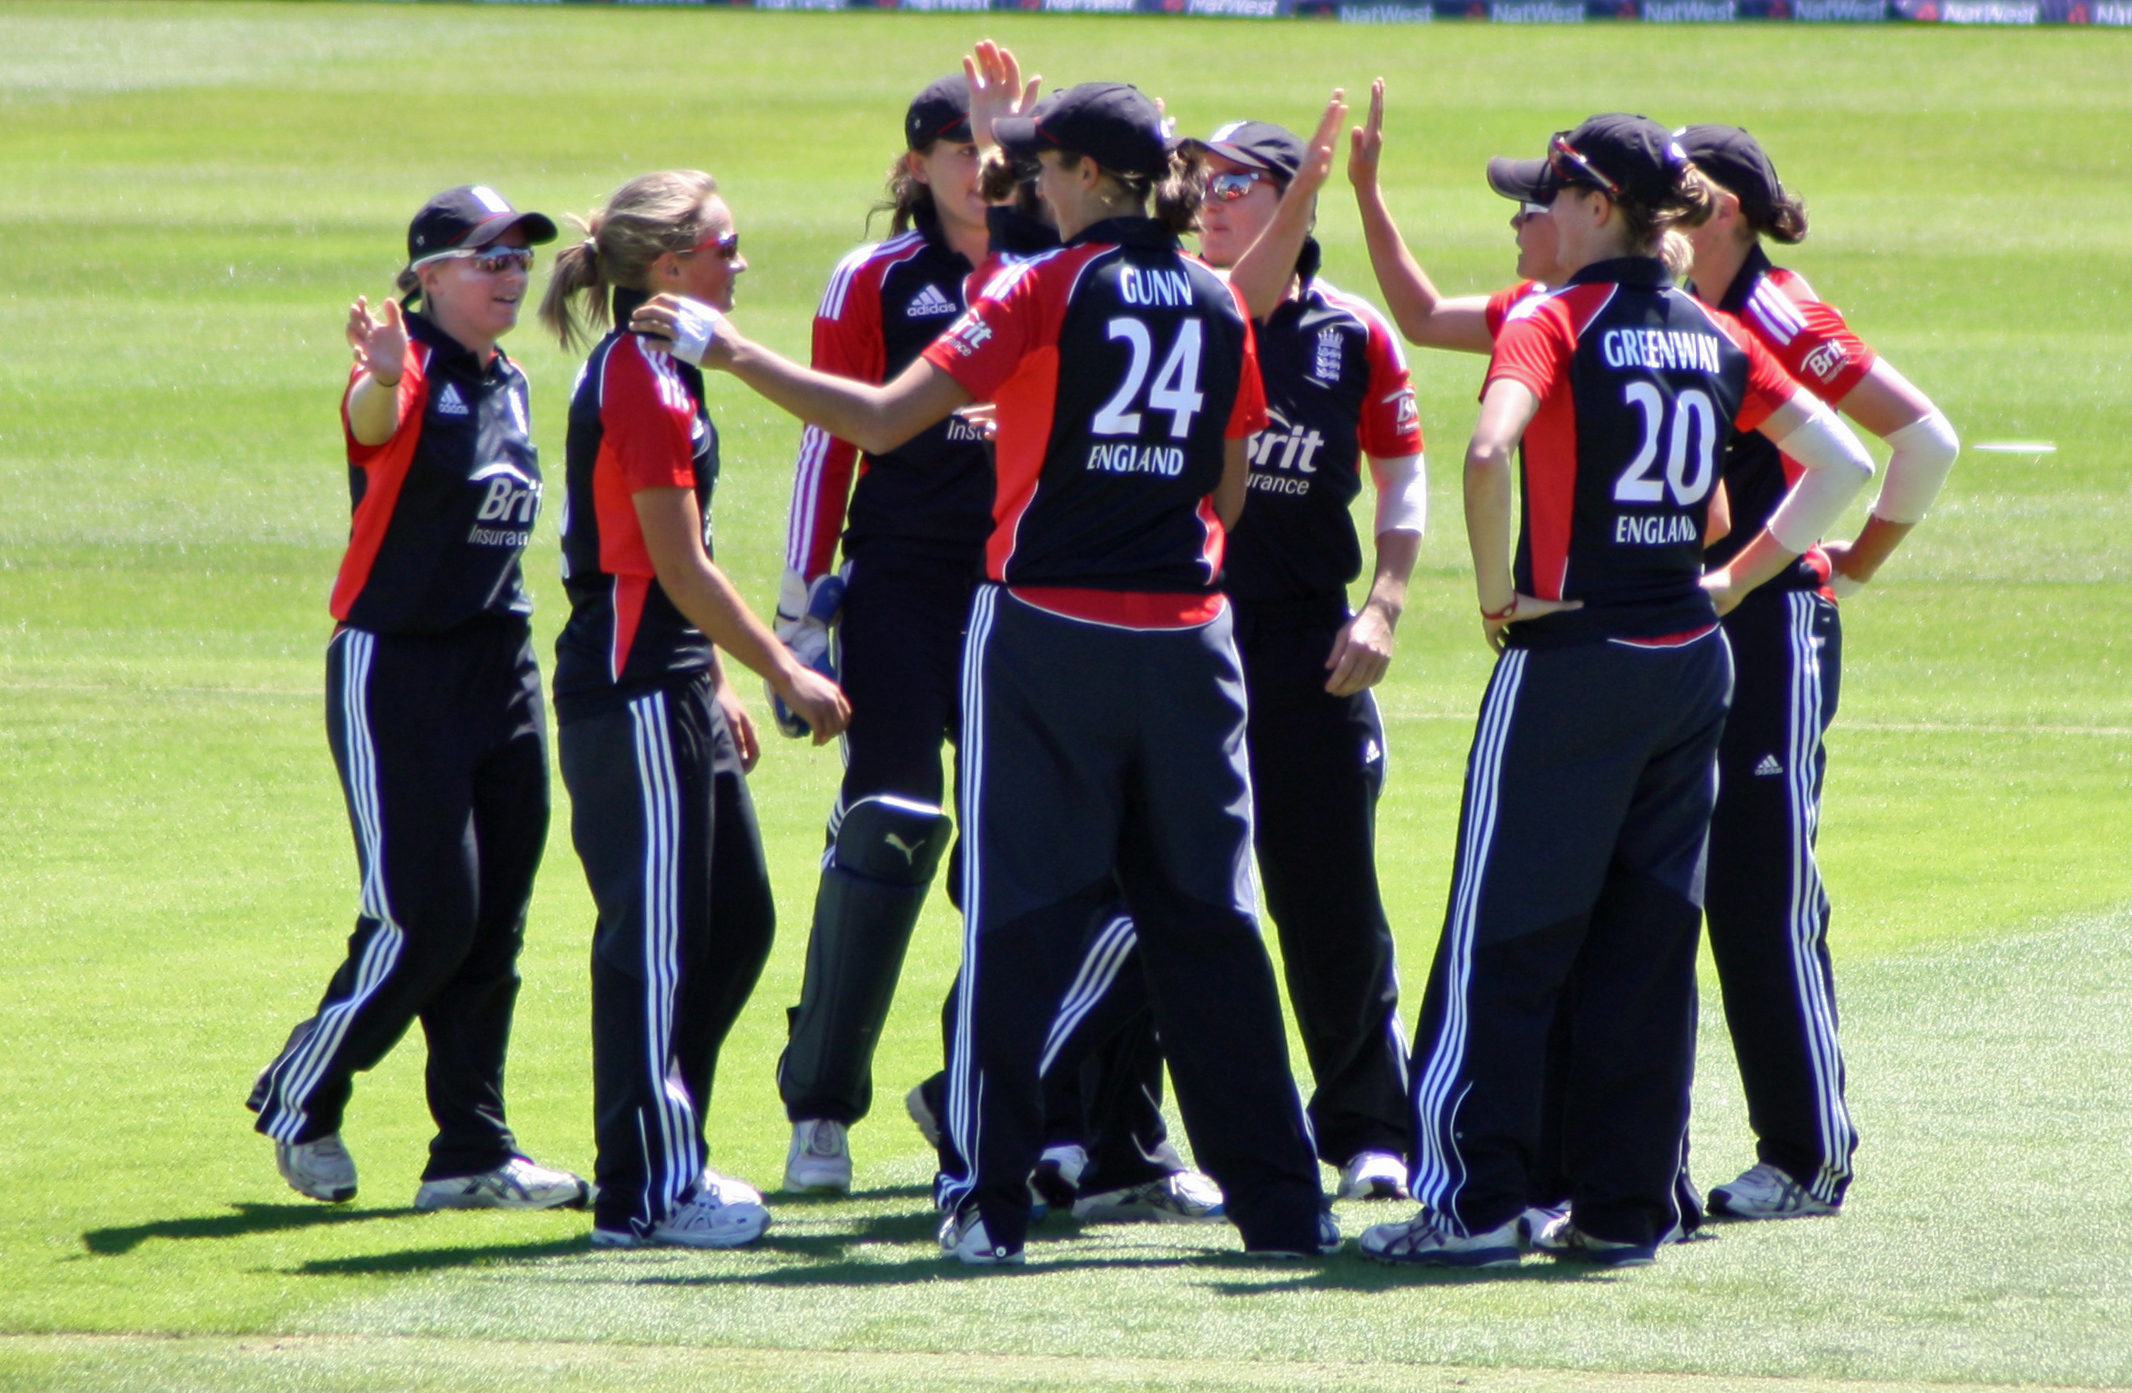 English female cricket team celebrating their victory